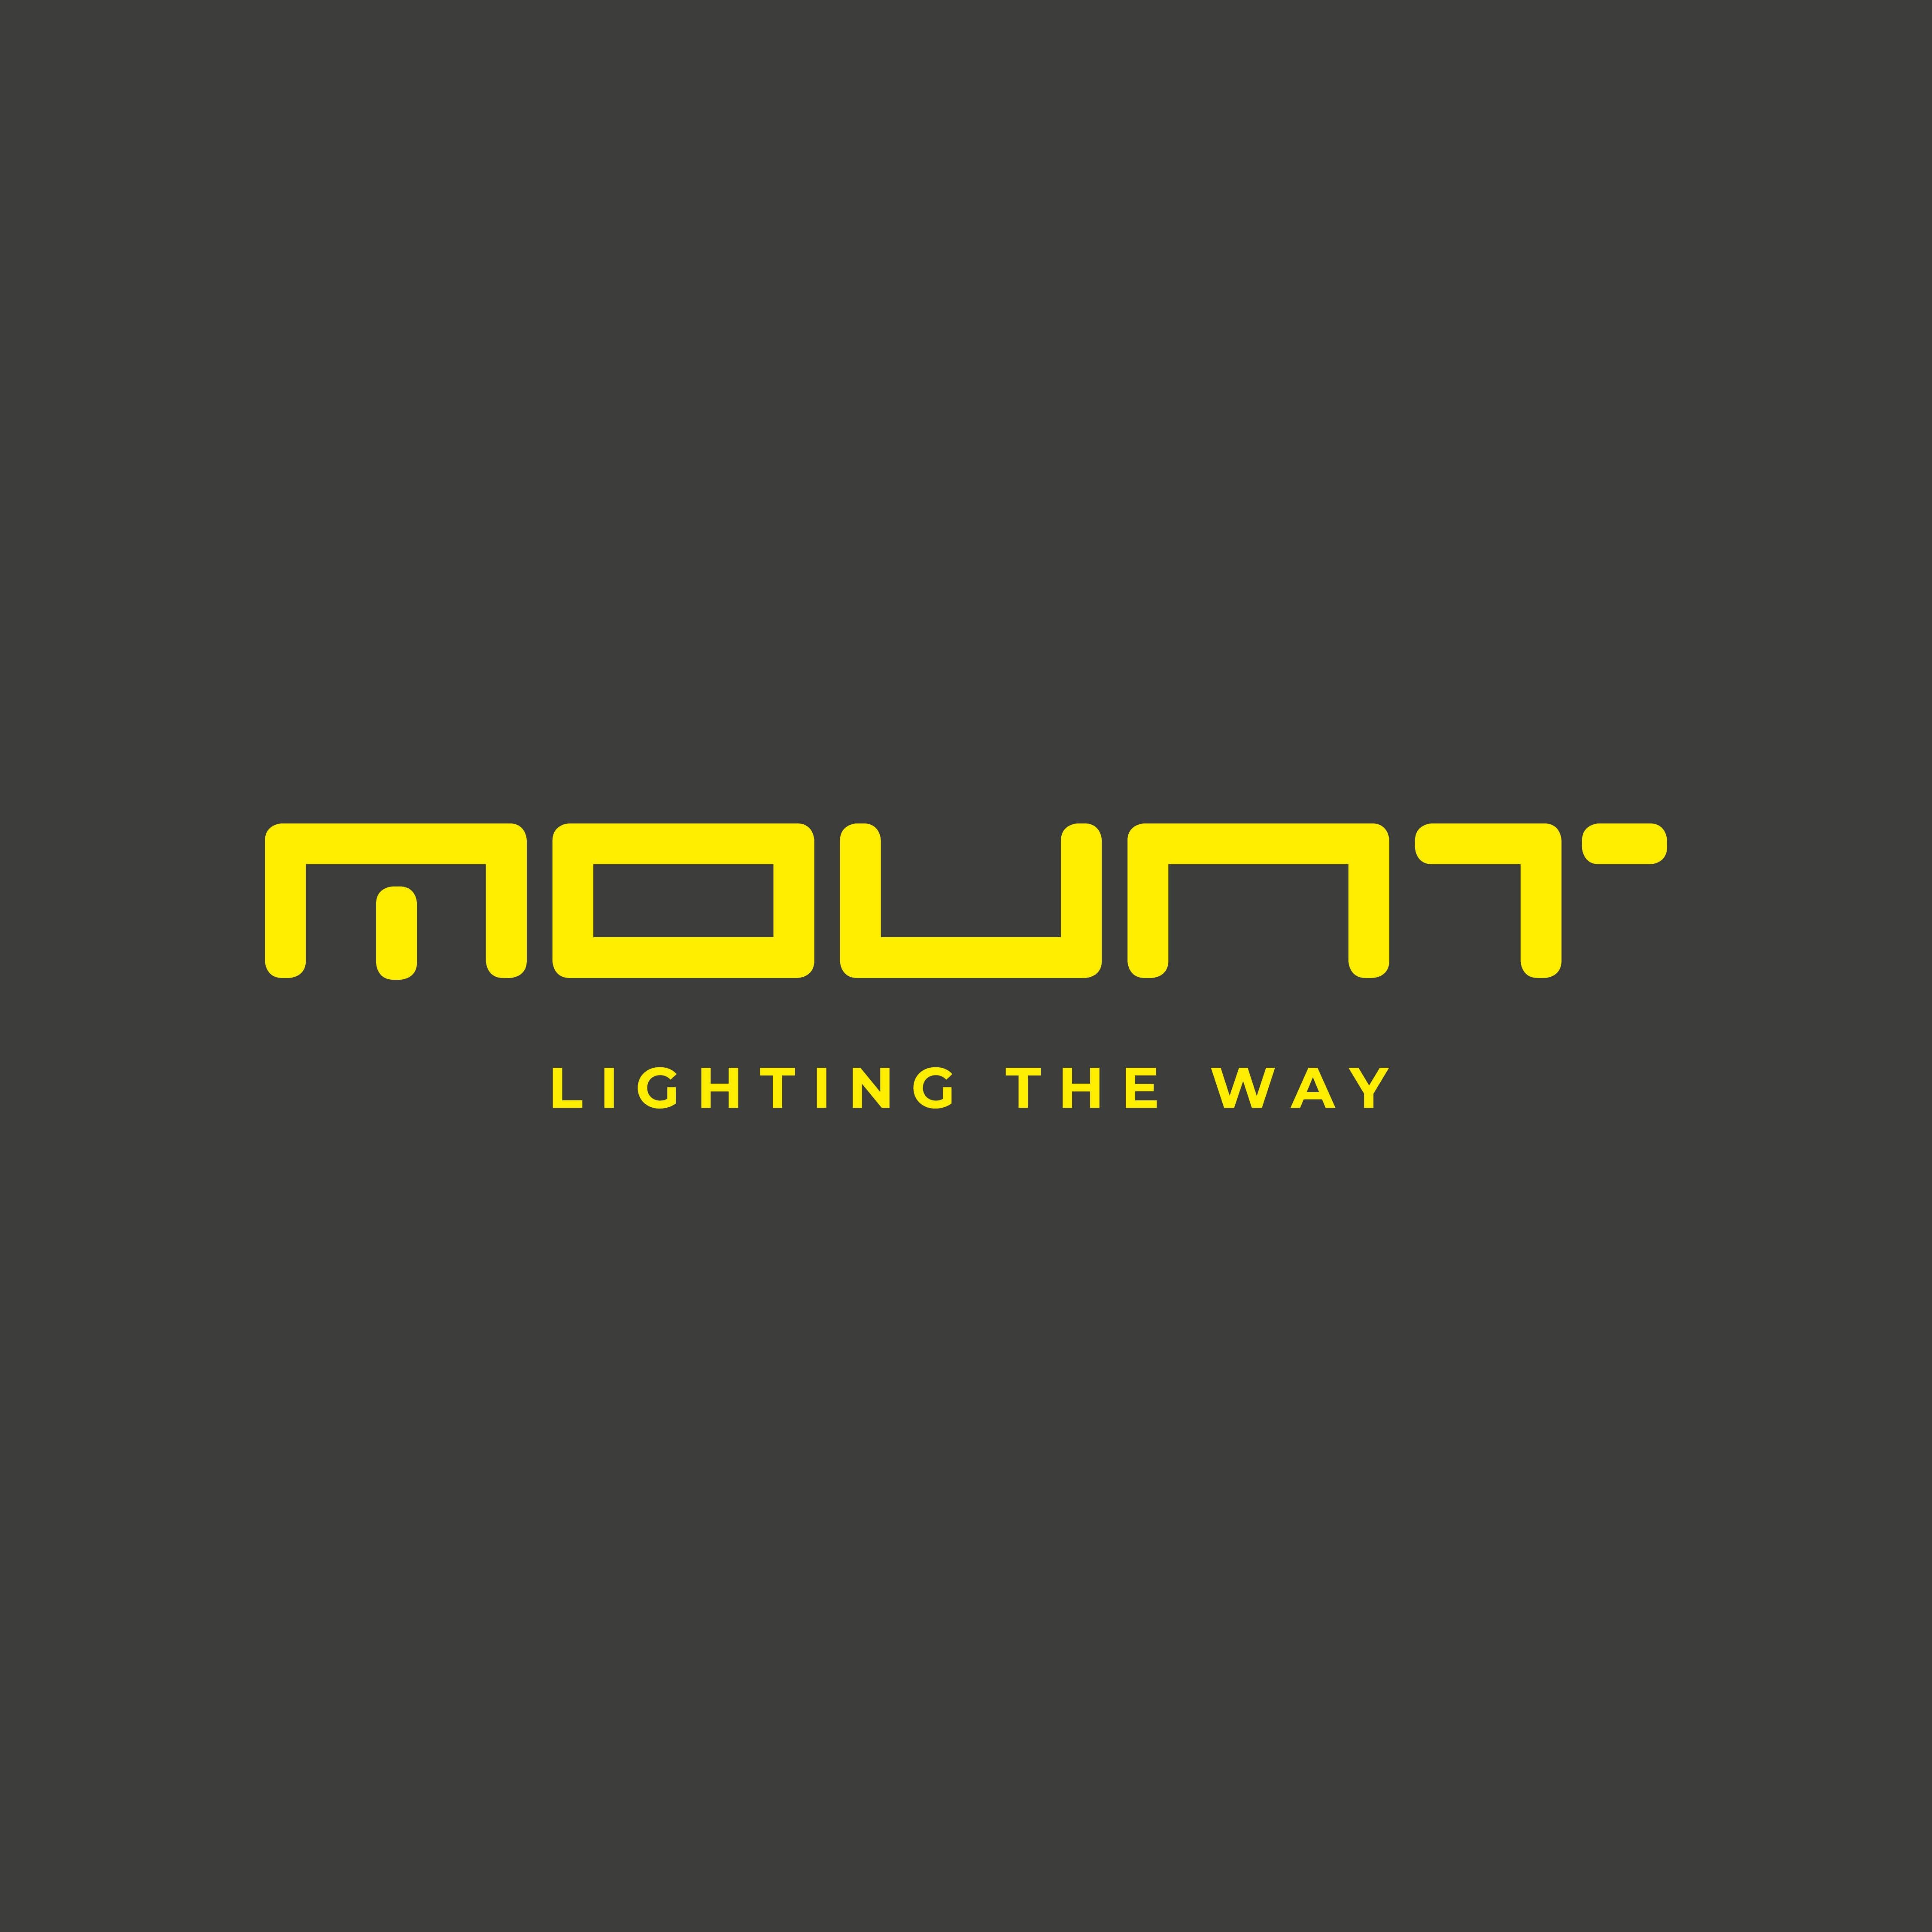 Mount Lighting